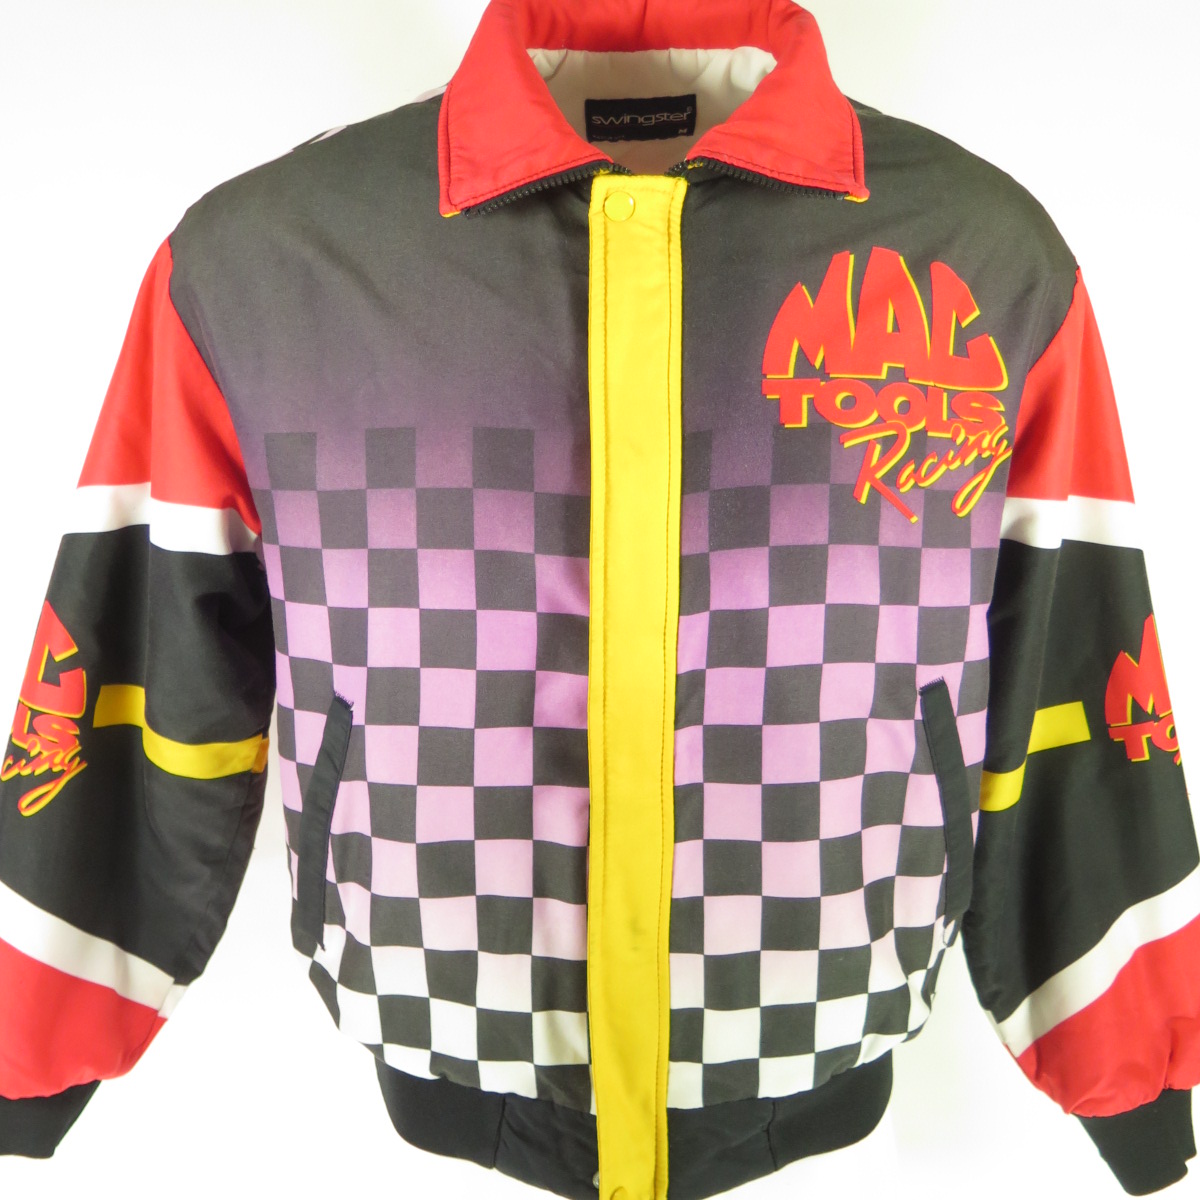 Vintage 80s Mac Tools Racing Jacket Mens M Swingster Wrench of